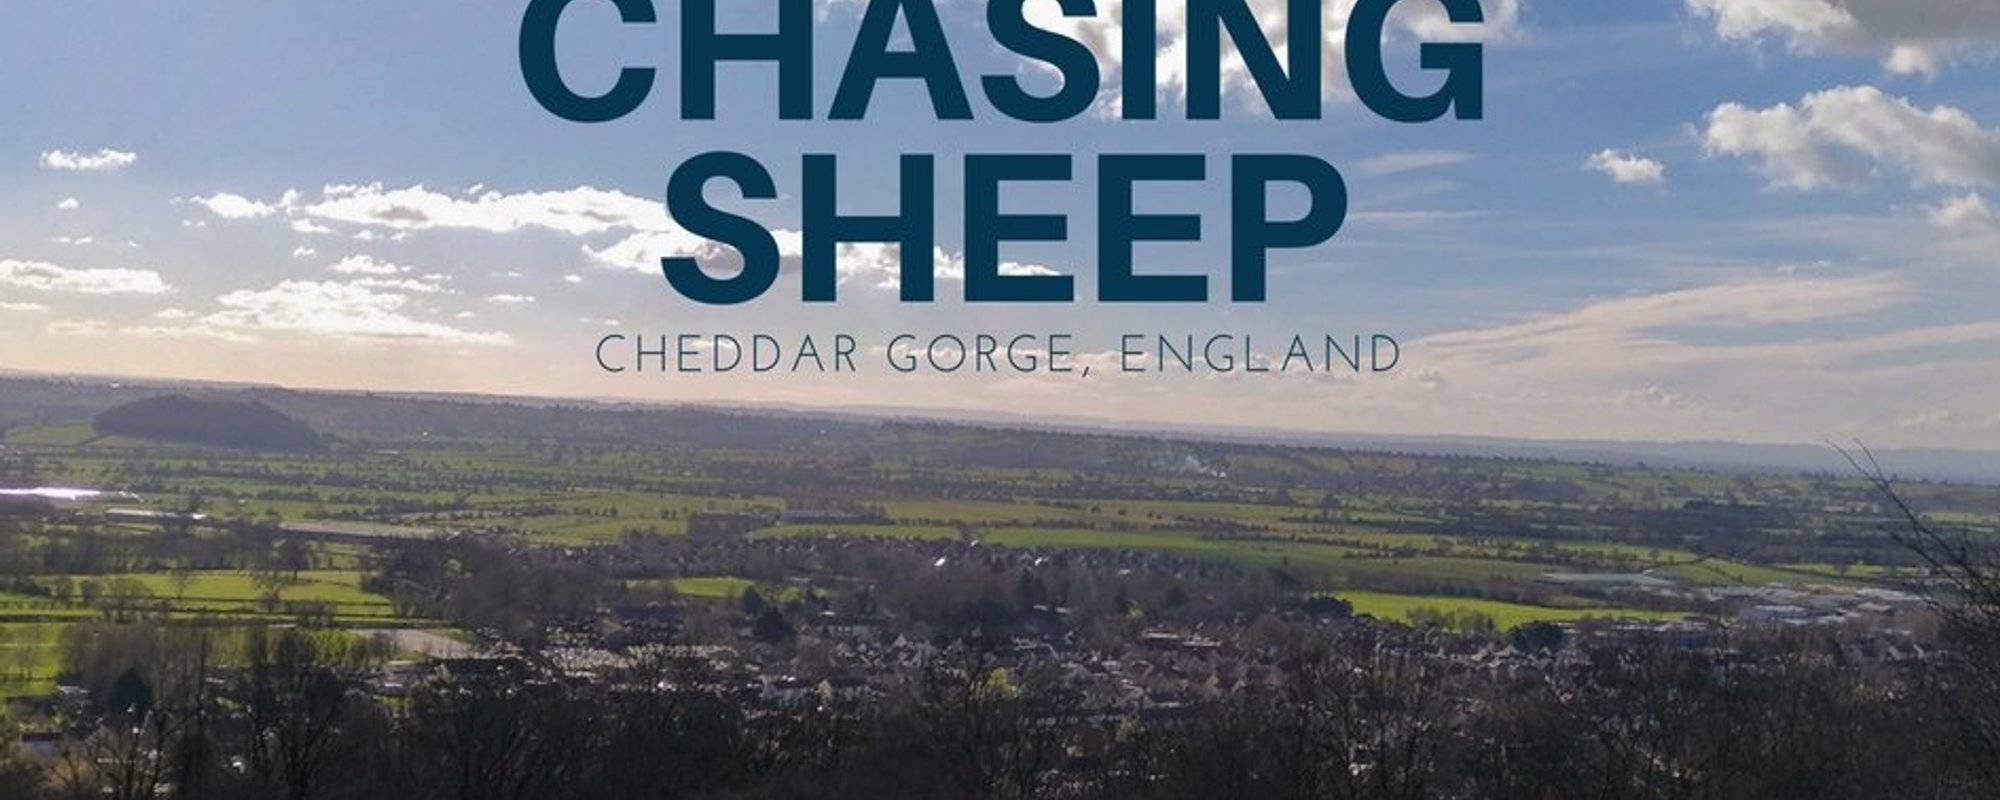 Chasing sheep on Cheddar Gorge cliff top  切達峽谷崖頂散步